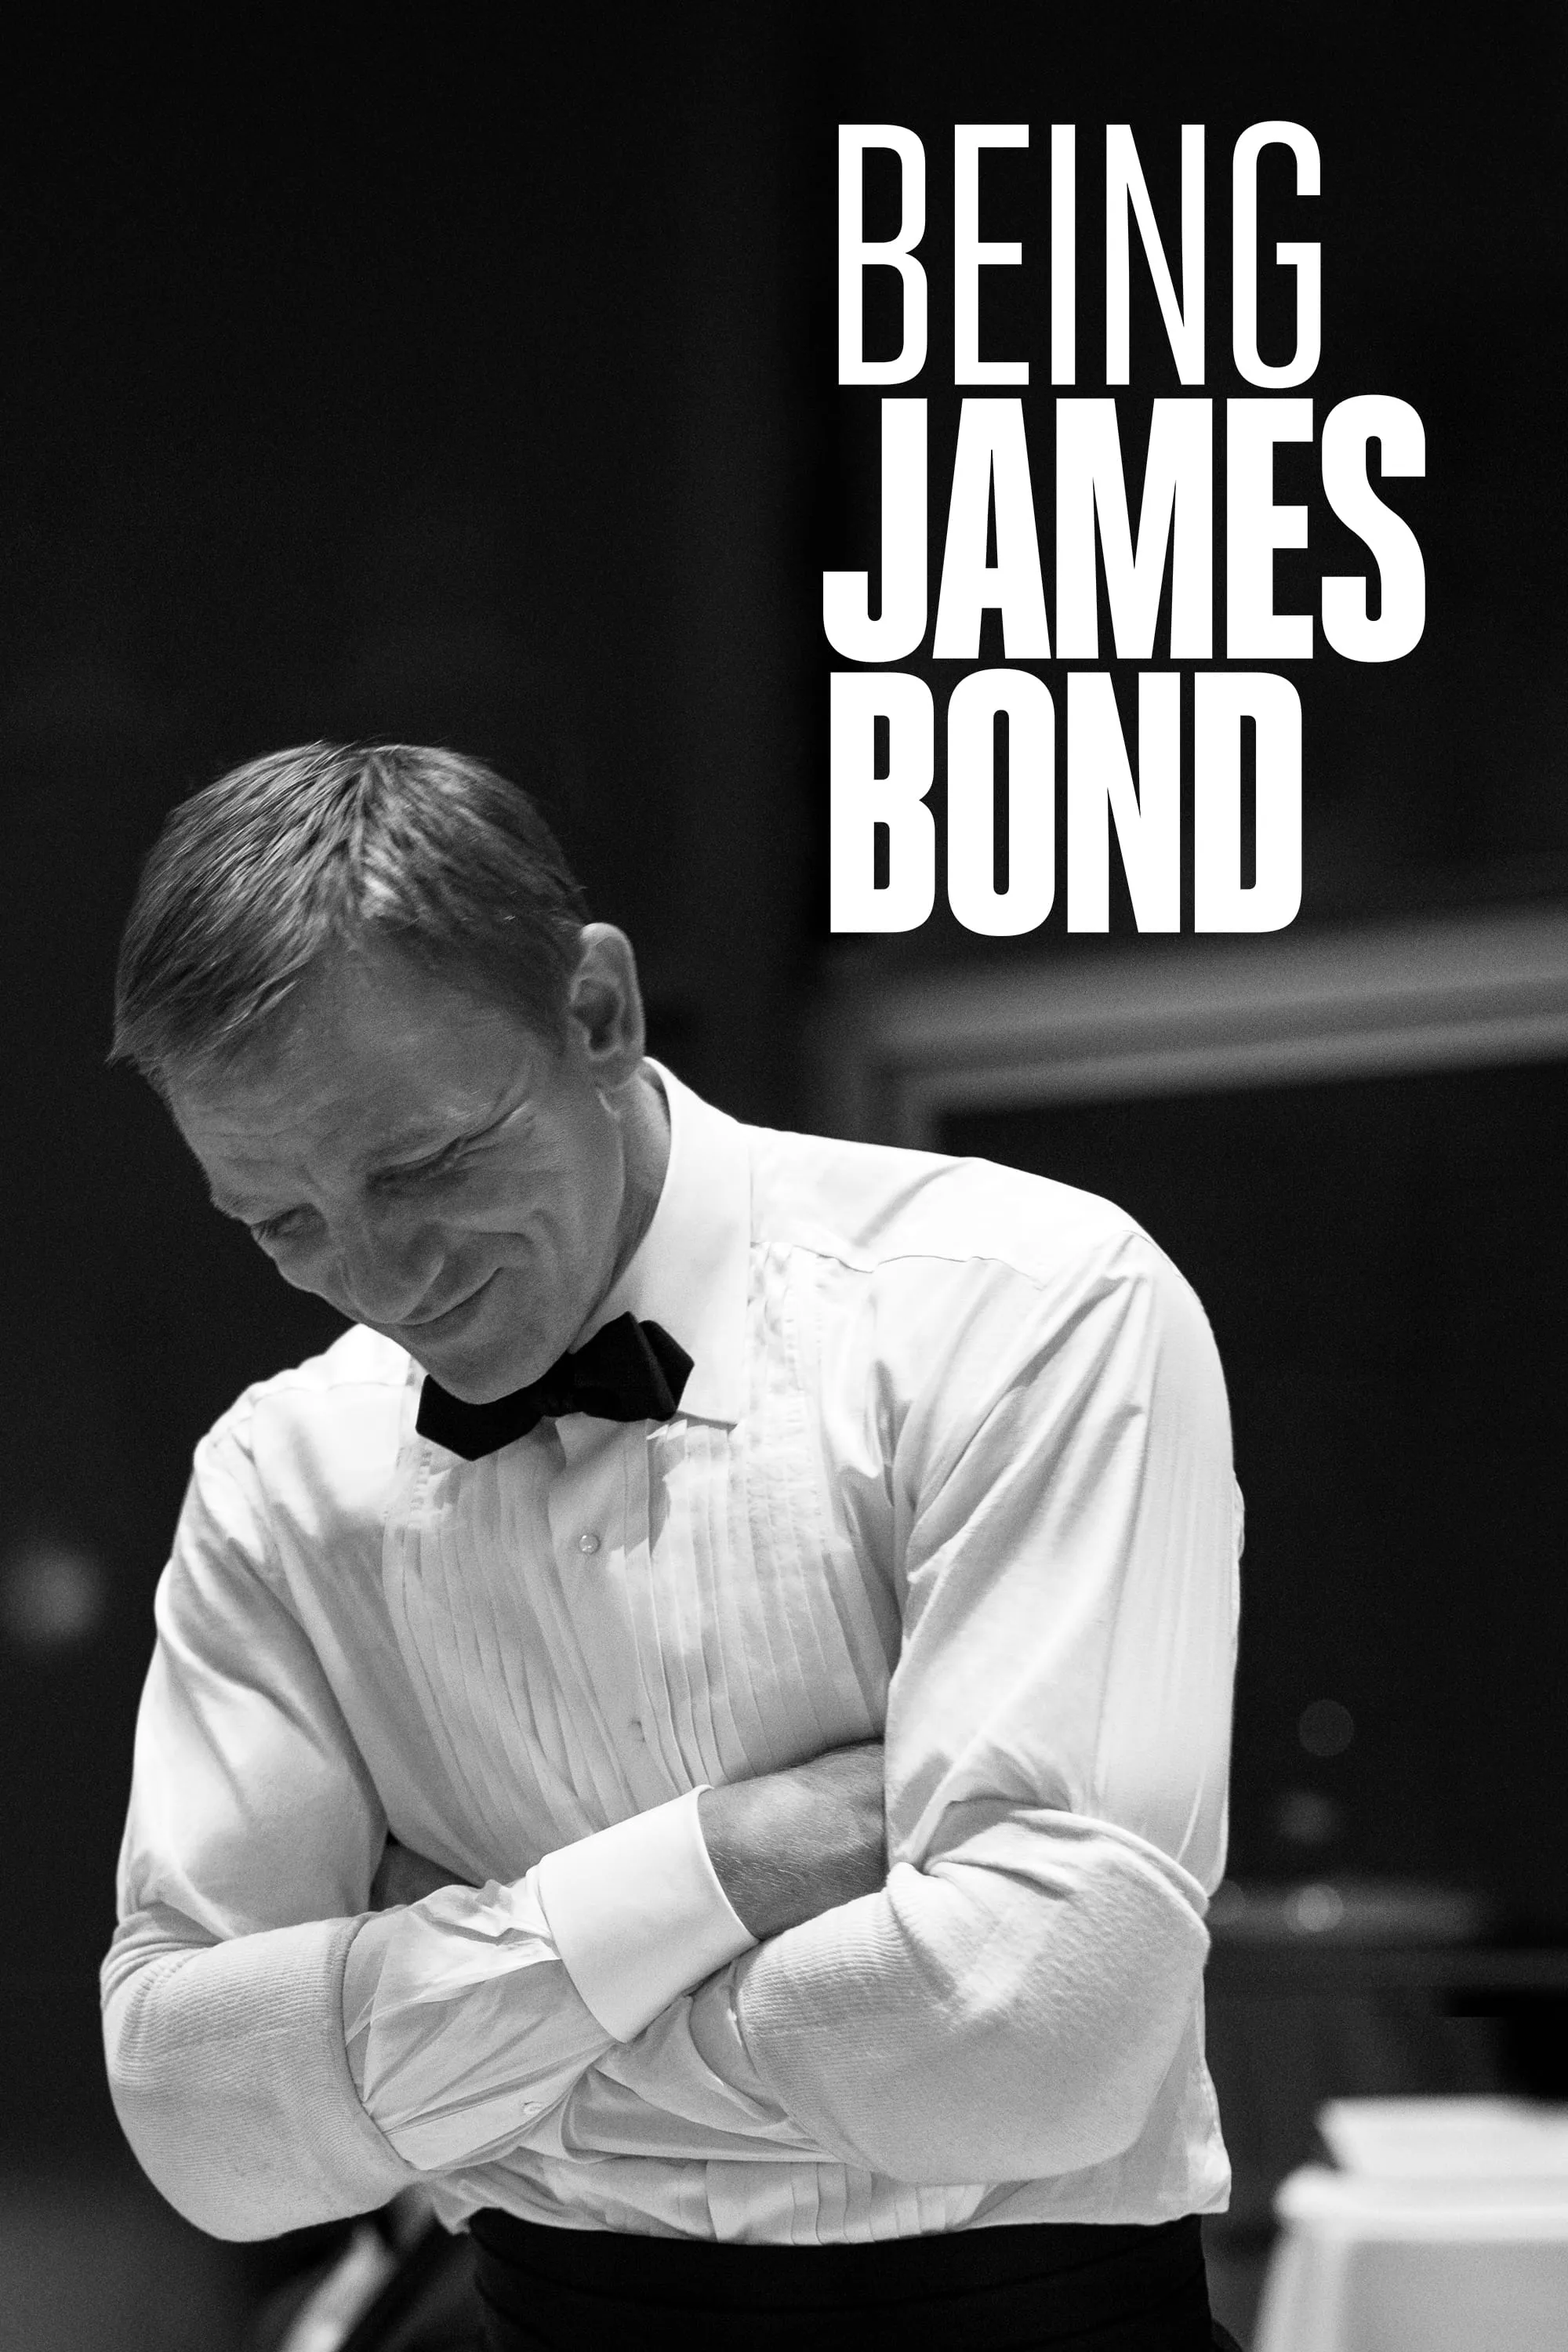 Being James Bond | Being James Bond (2021)